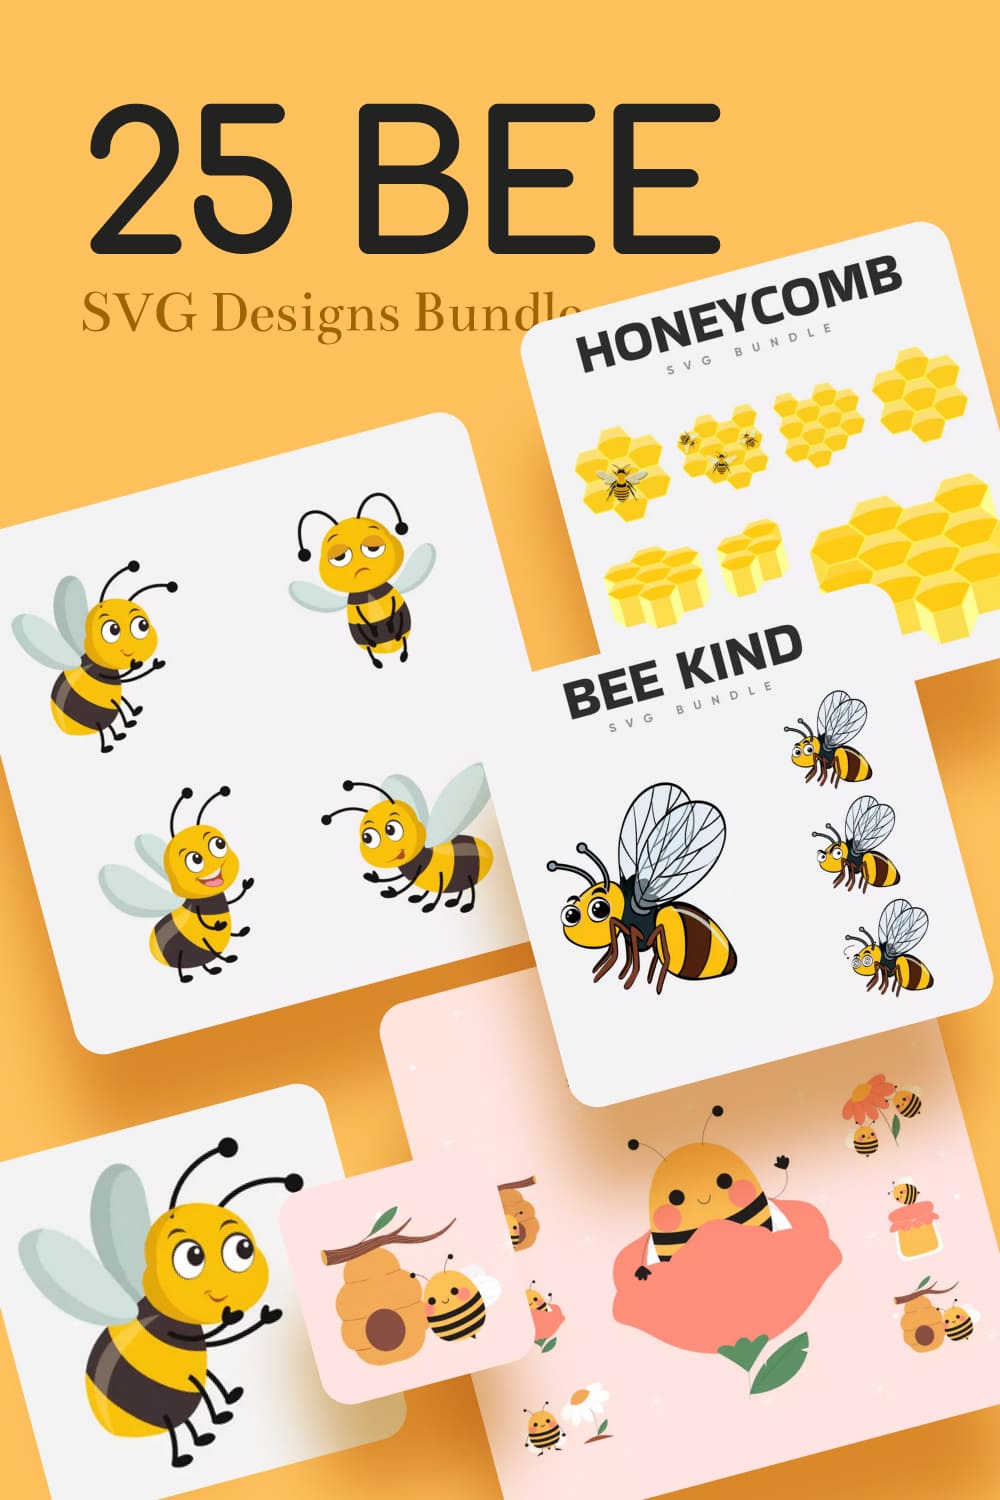 25 Bee SVG Designs Bundle Pinterest.